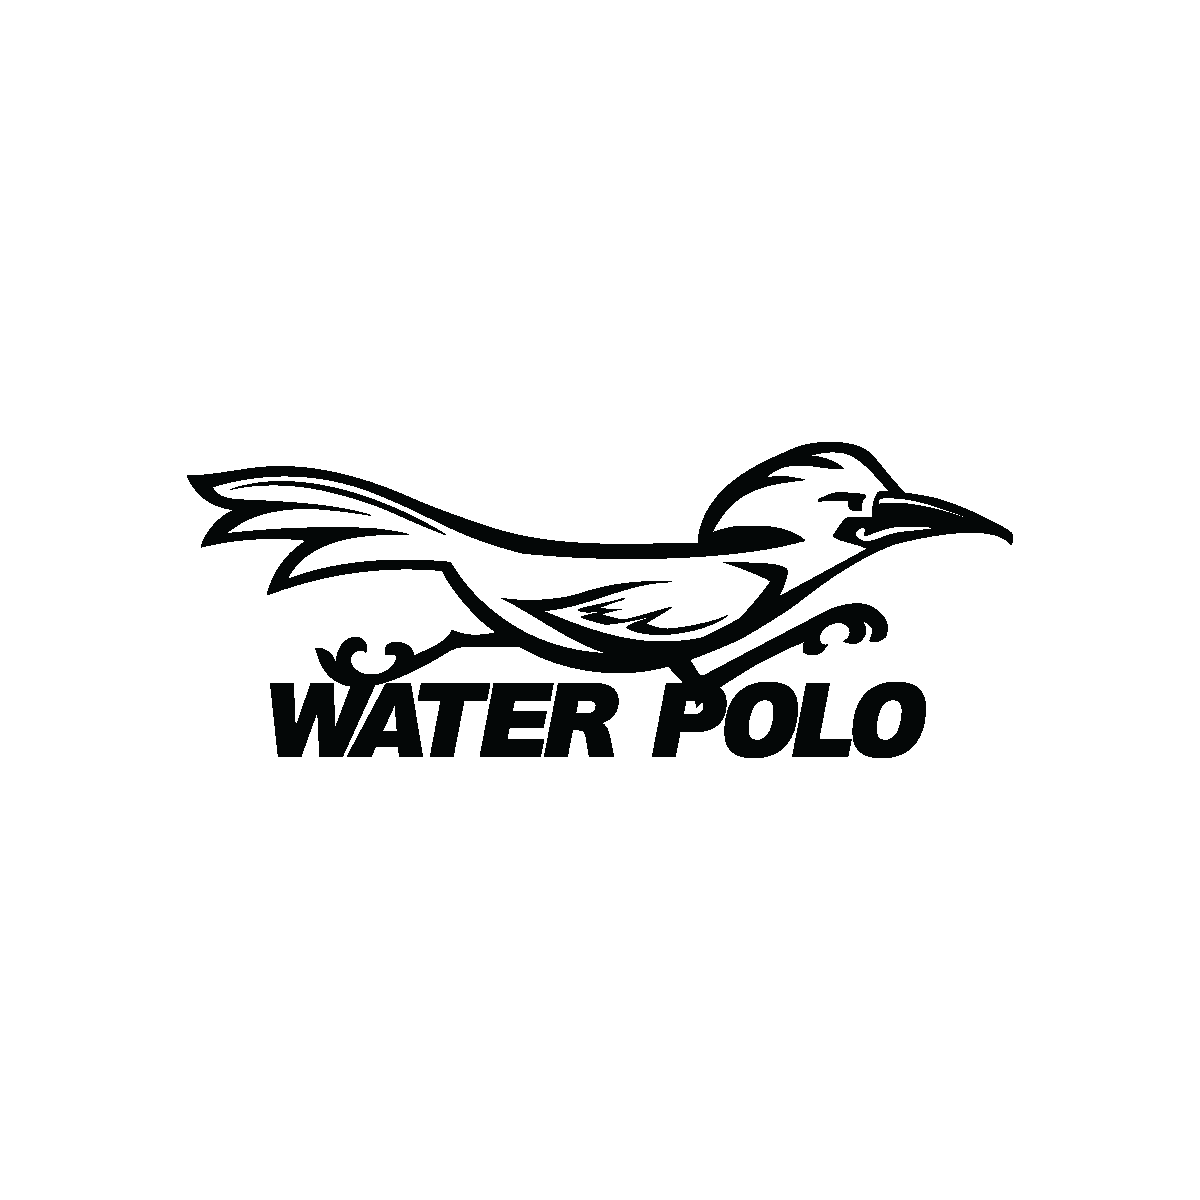 Water Polo mascot - black